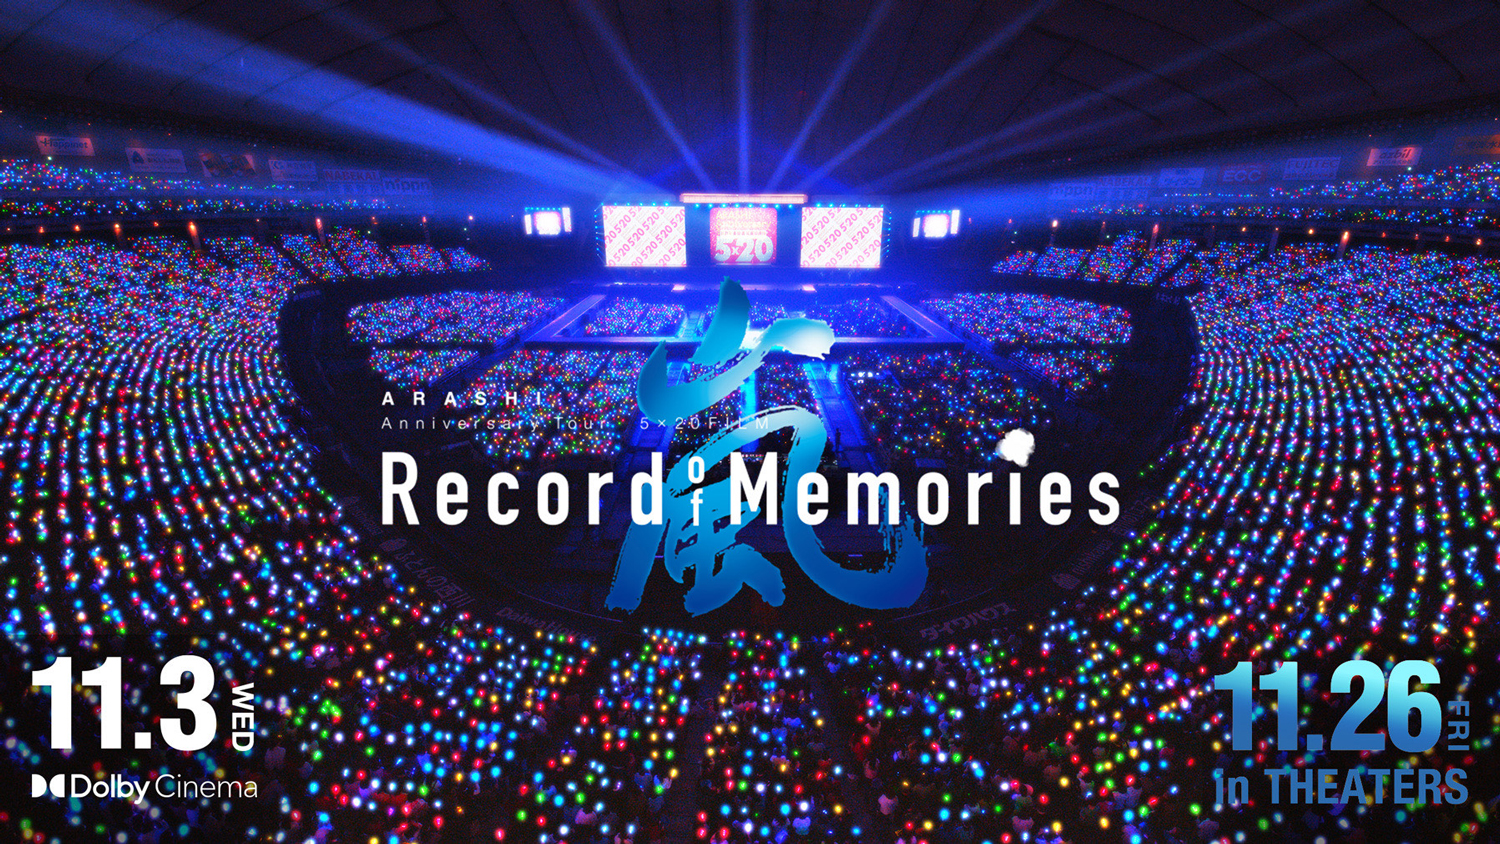 ARASHI Anniversary Tour 5×20 FILM “Recor